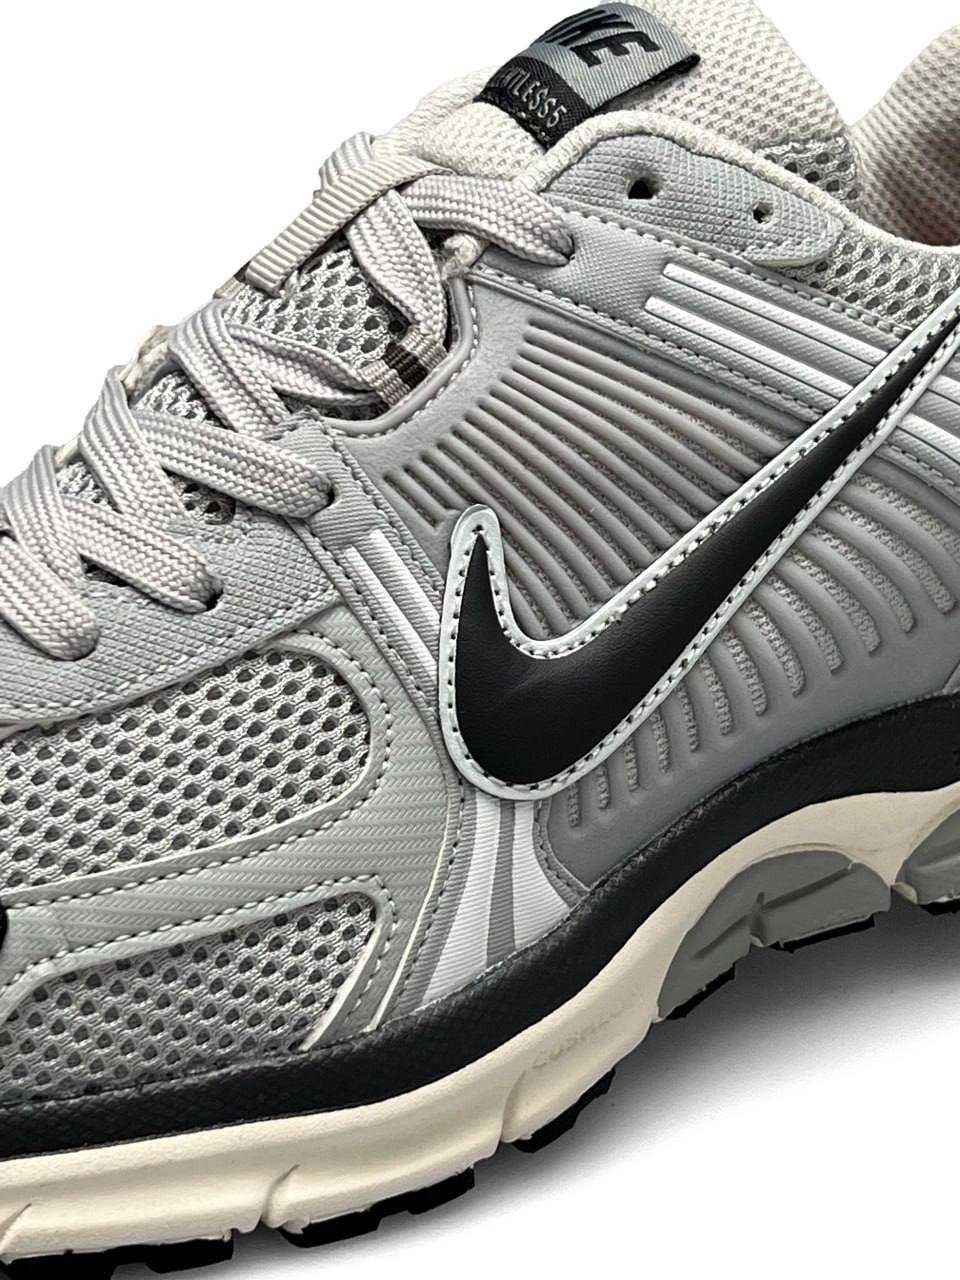 Nike Vomero 5 New Gray Silver Black кроссовки мужские nike zoom (найк)